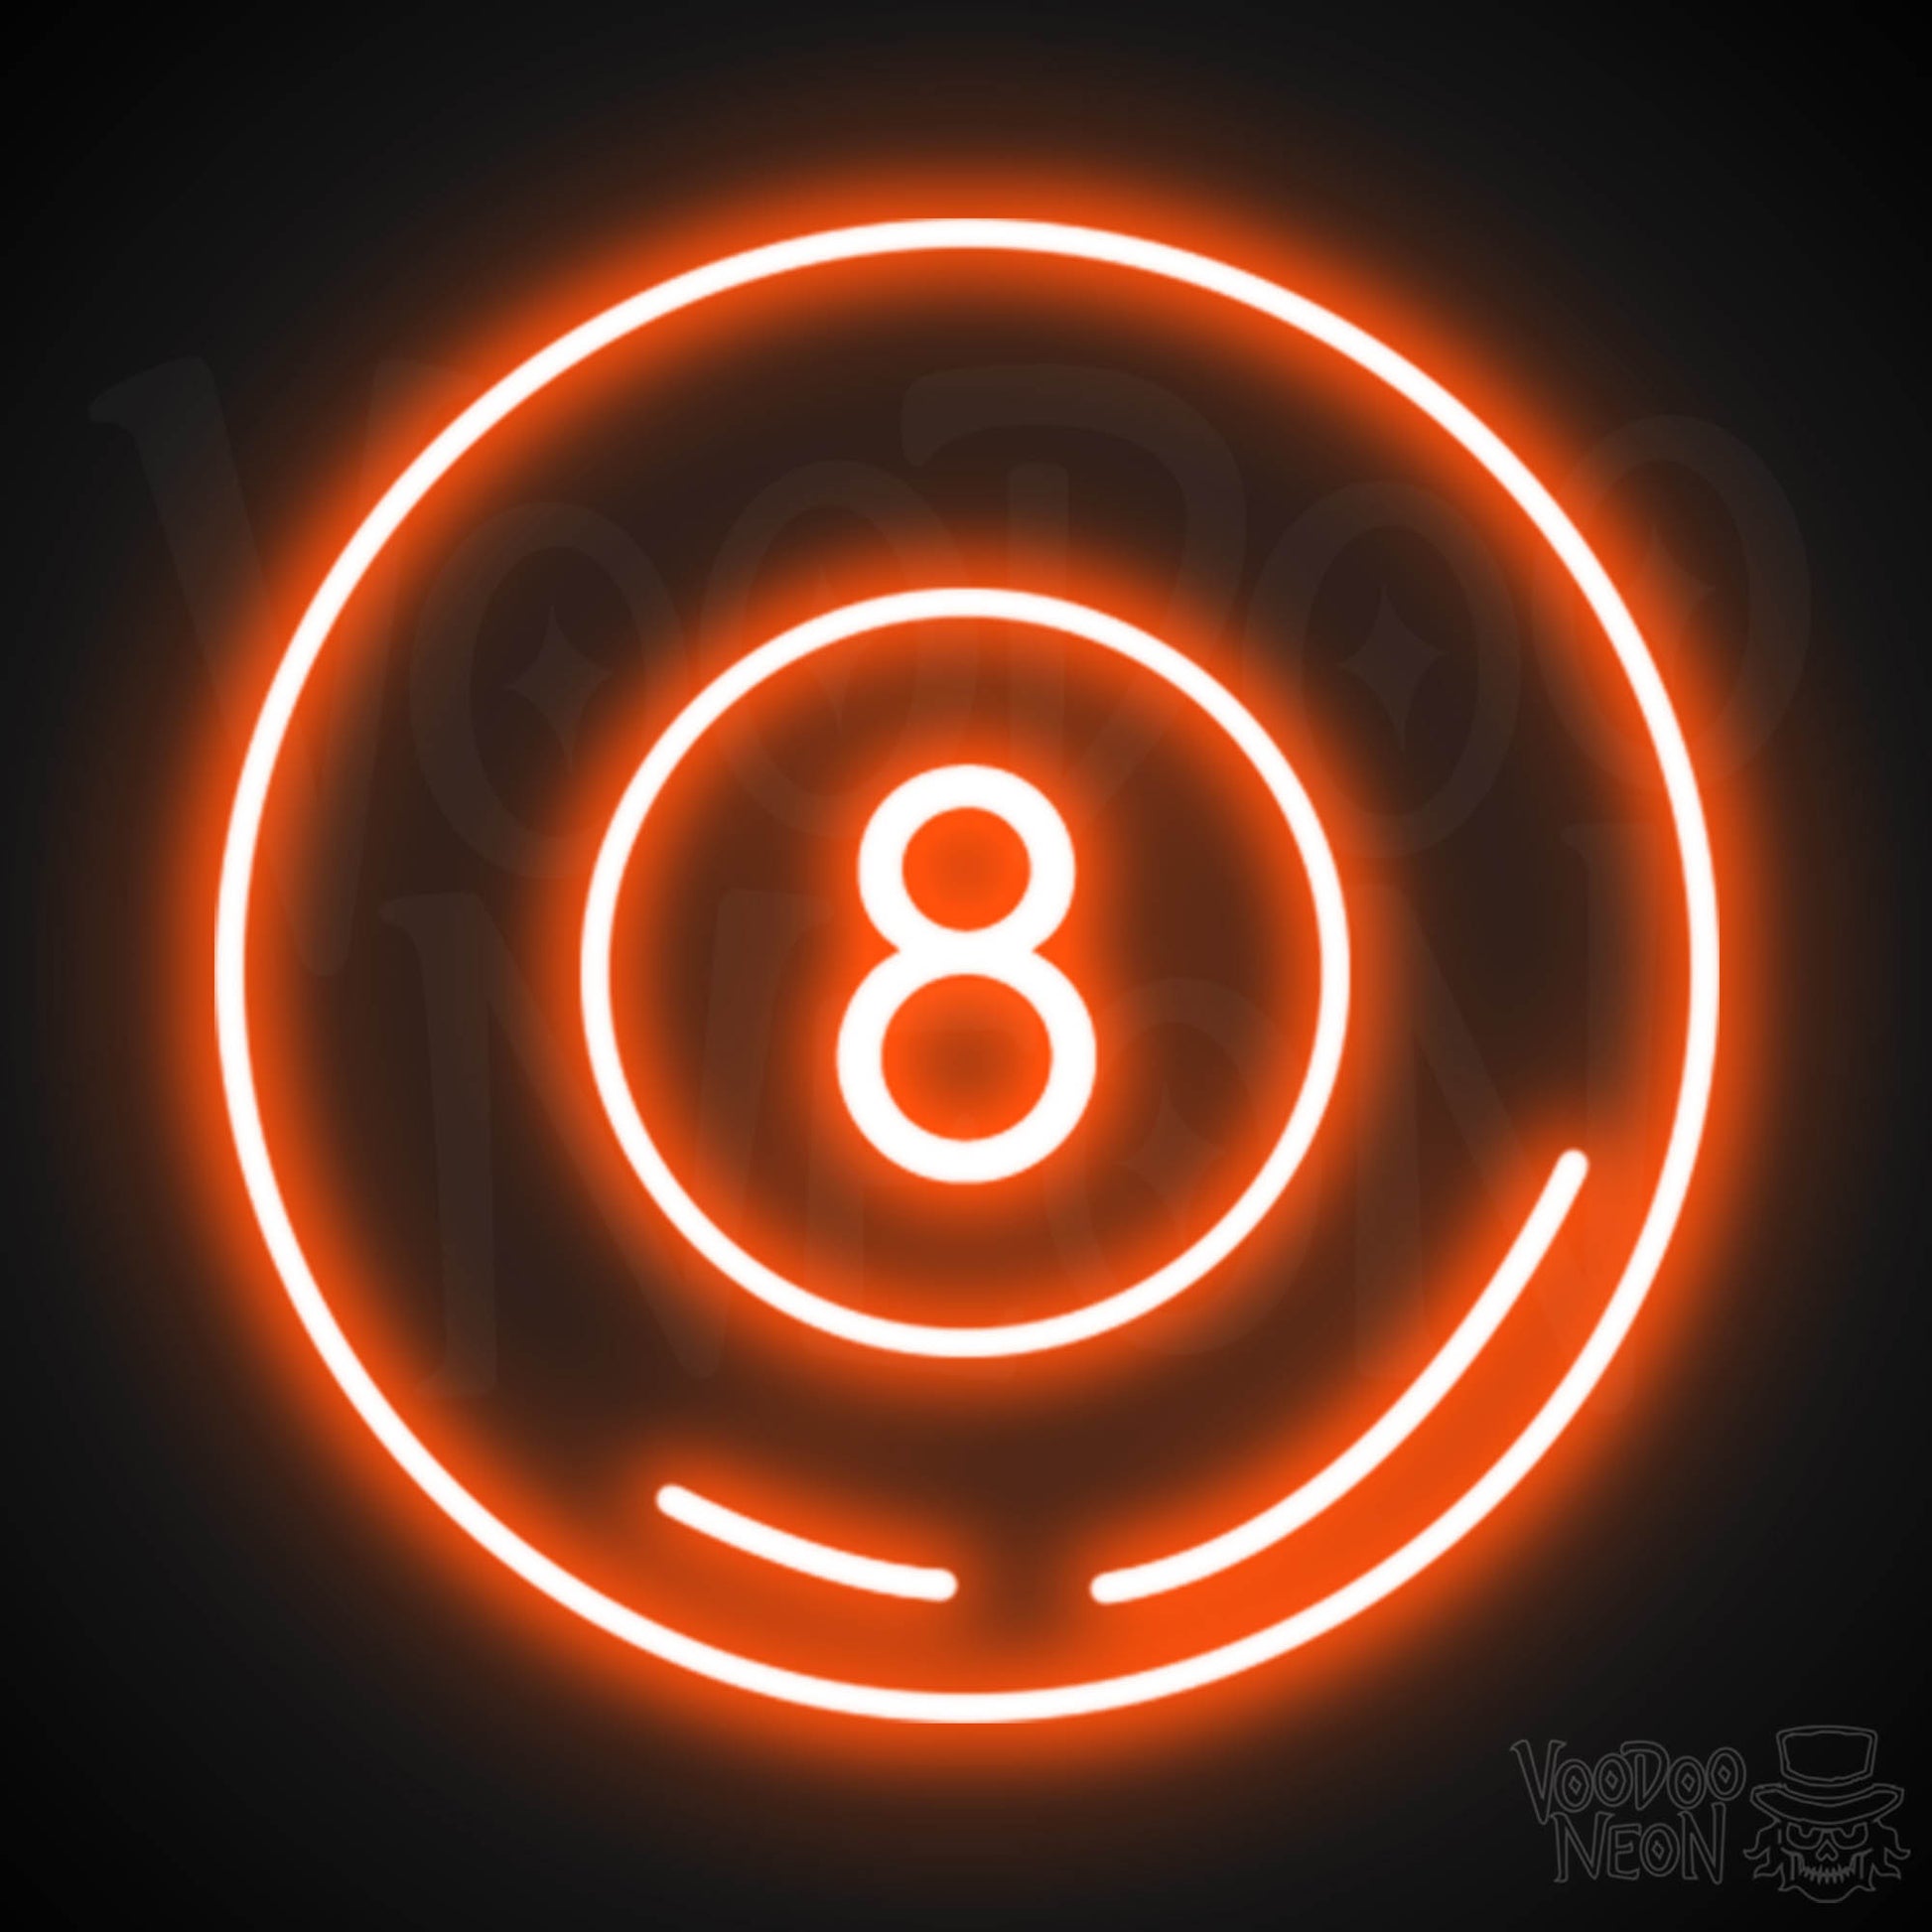 Magic 8 Ball Neon Sign - Neon Magic 8 Ball Sign - Wall Art - Color Orange